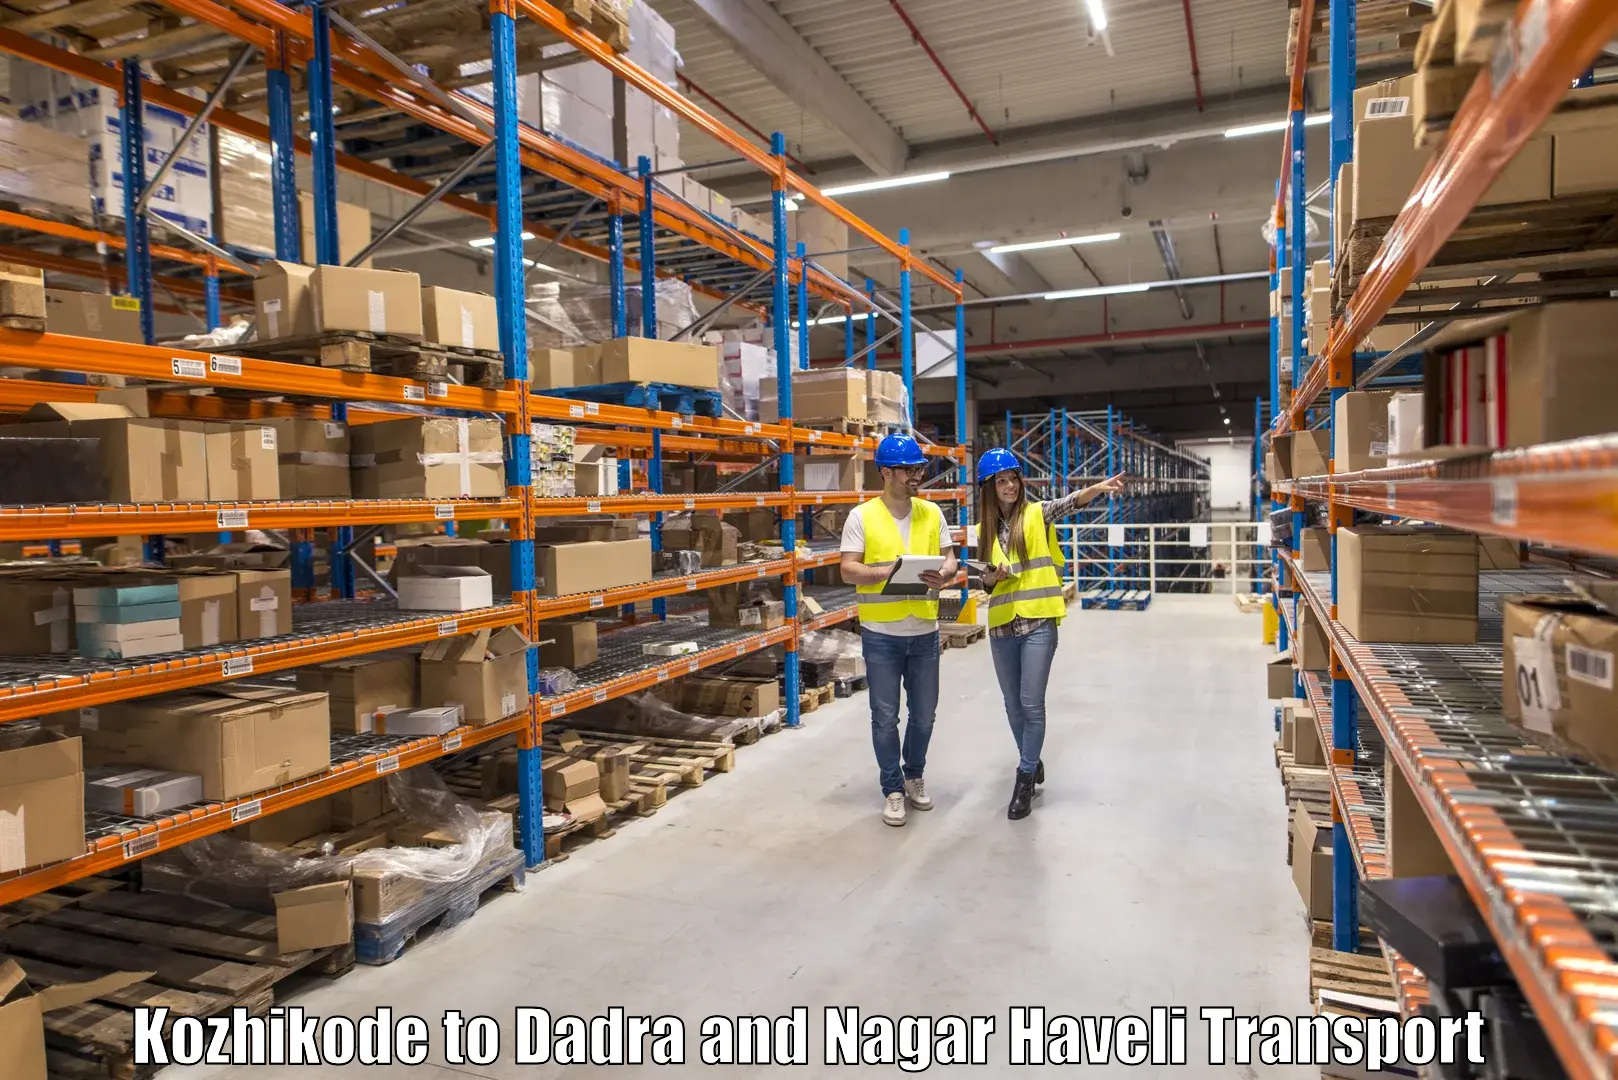 Truck transport companies in India Kozhikode to Dadra and Nagar Haveli